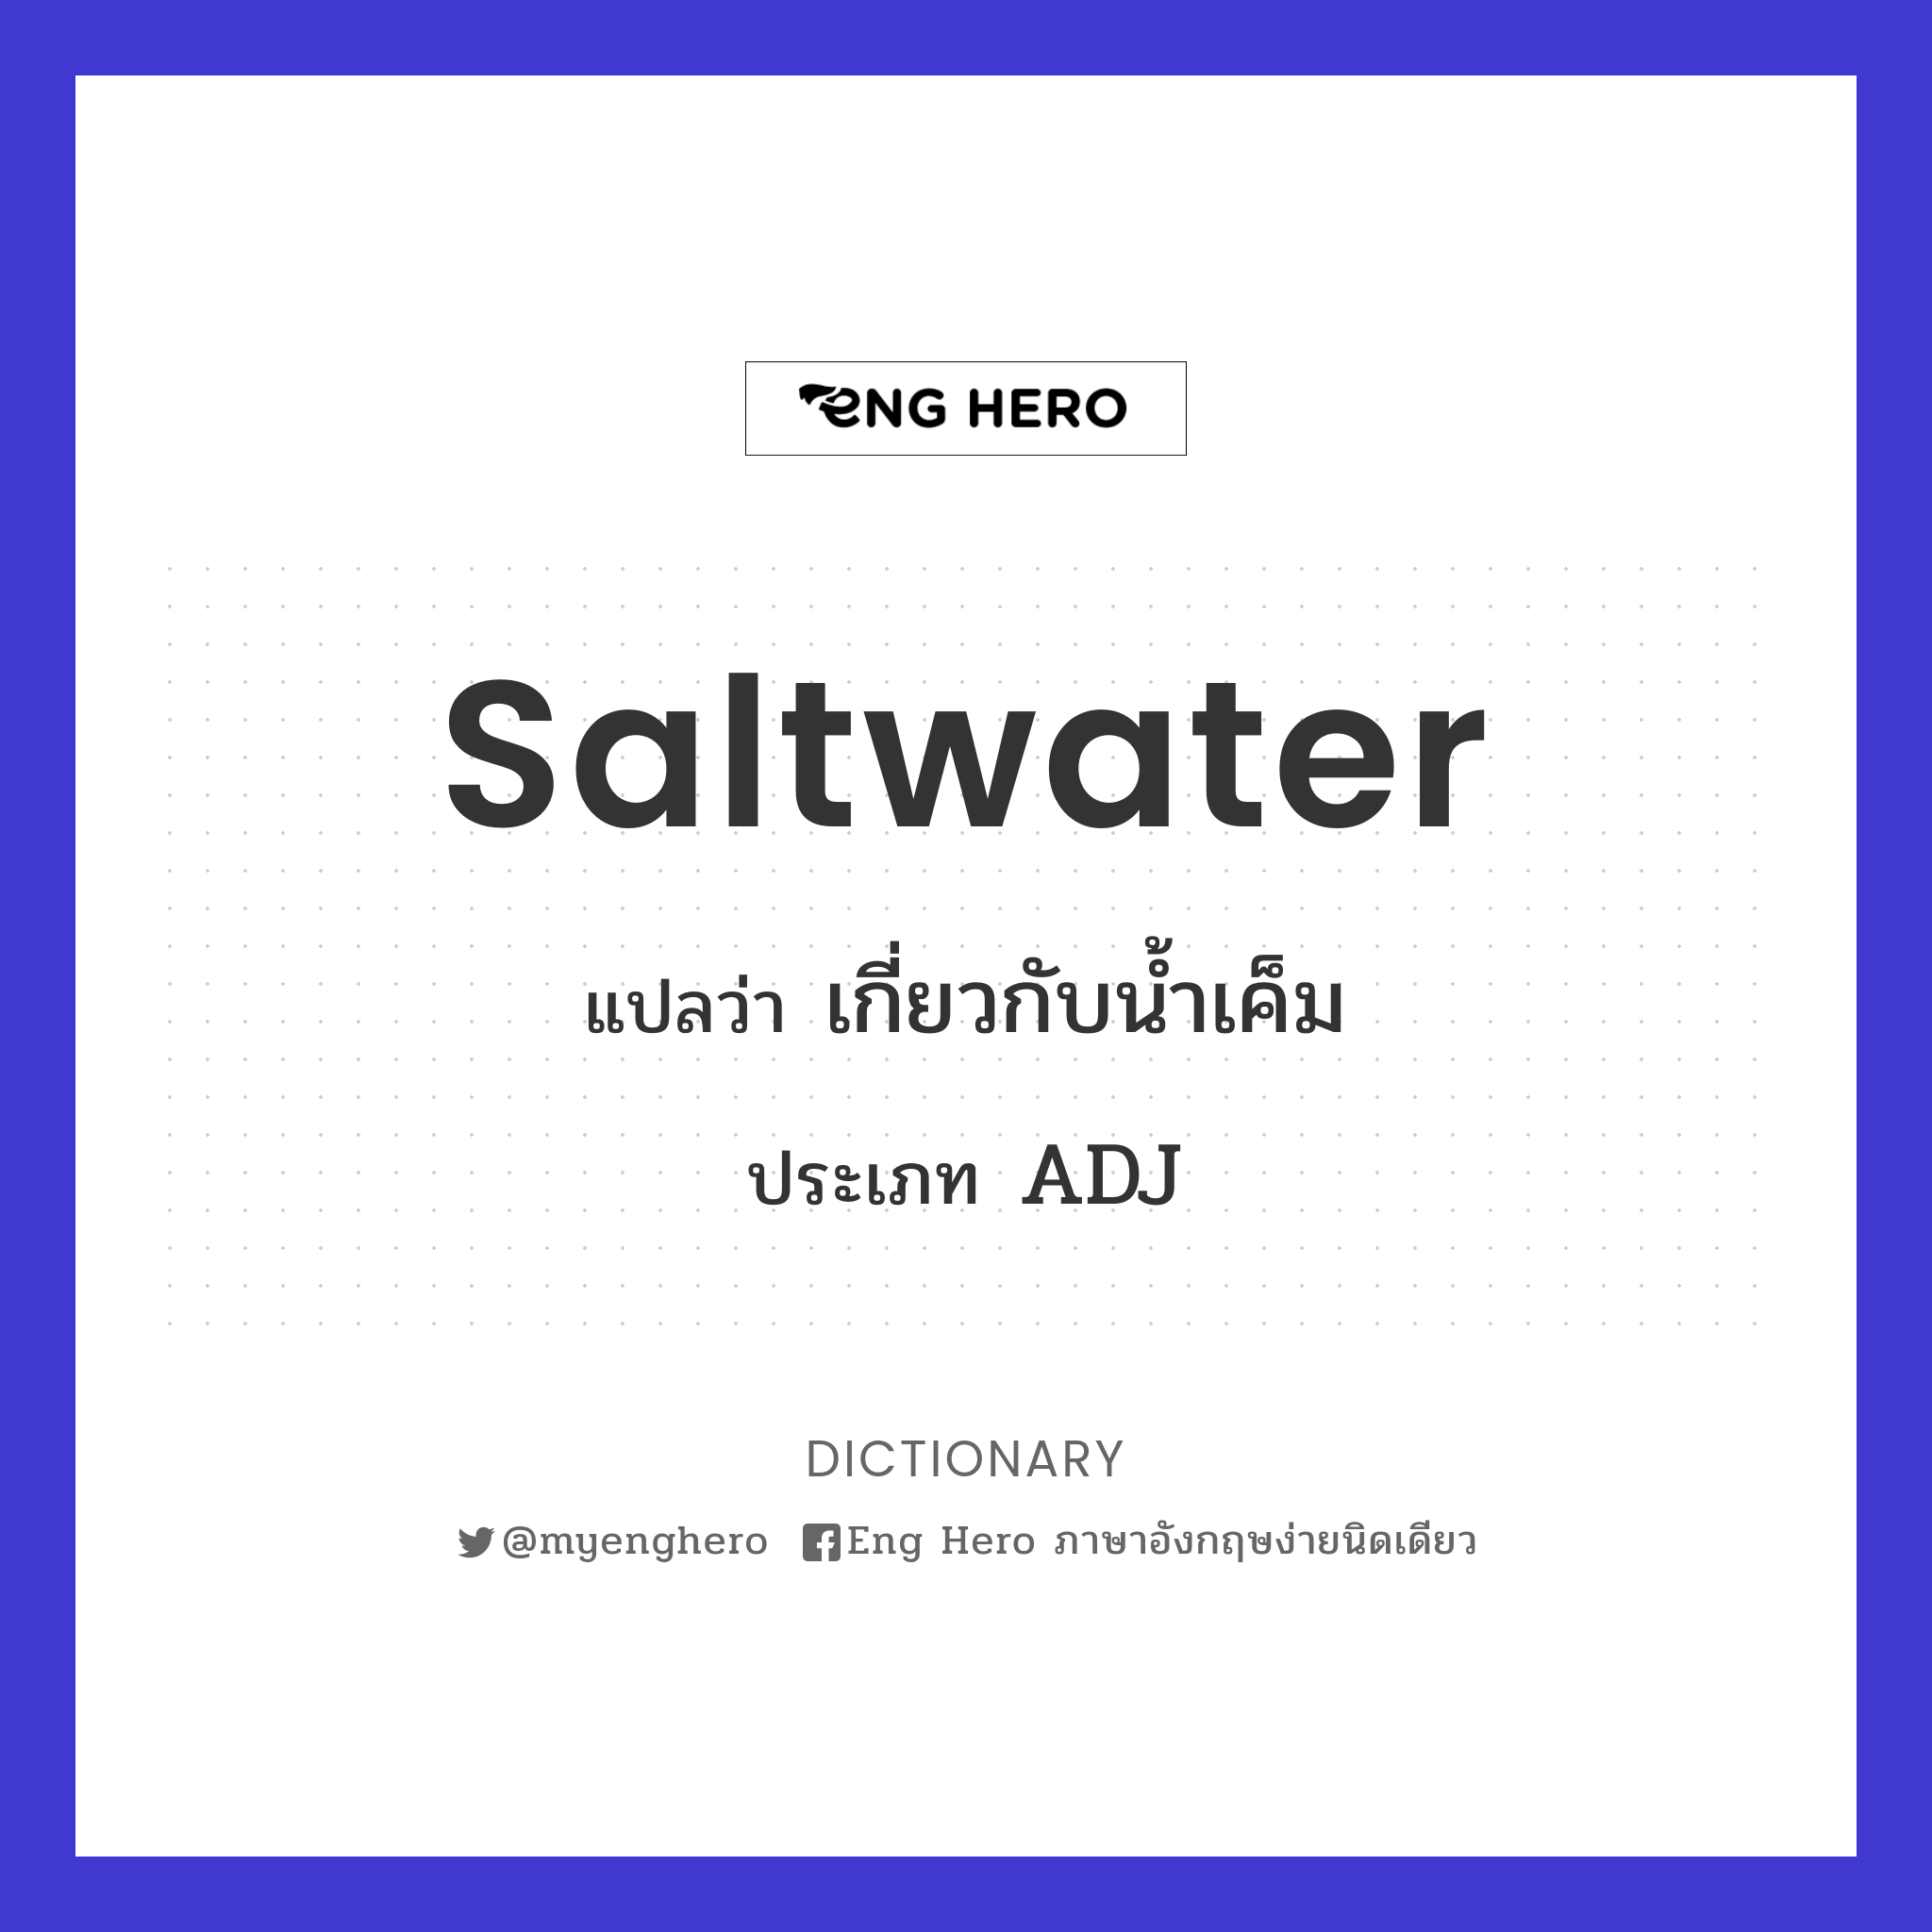 saltwater